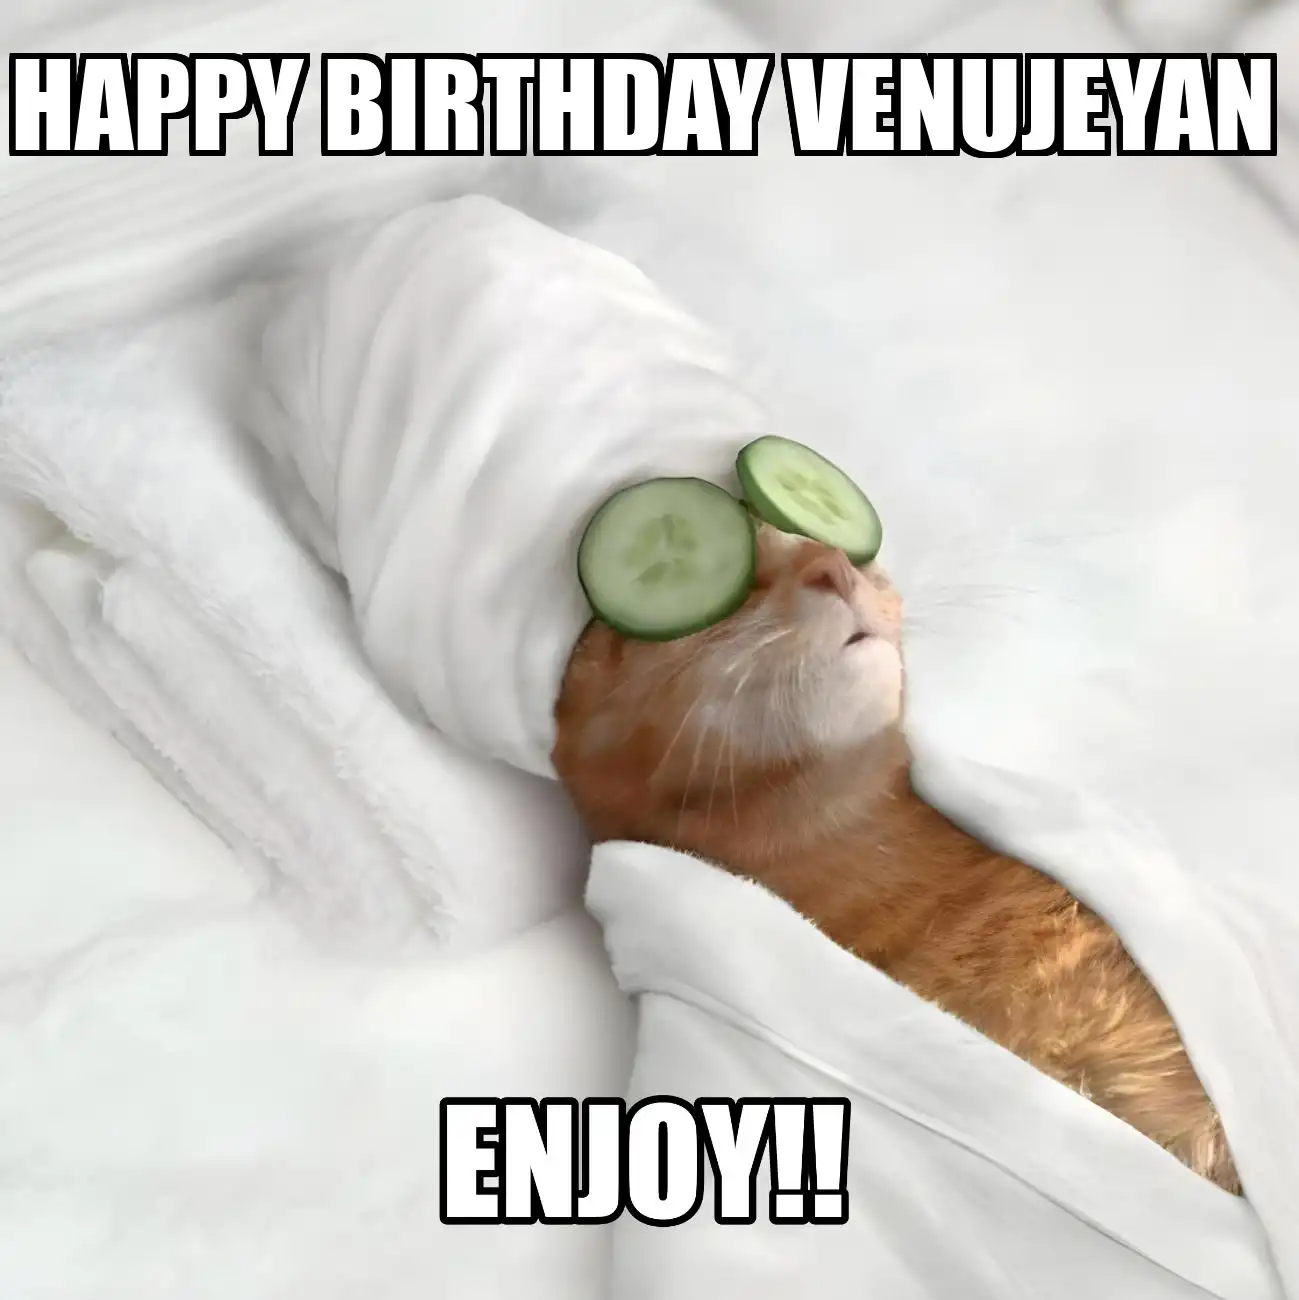 Happy Birthday Venujeyan Enjoy Cat Meme